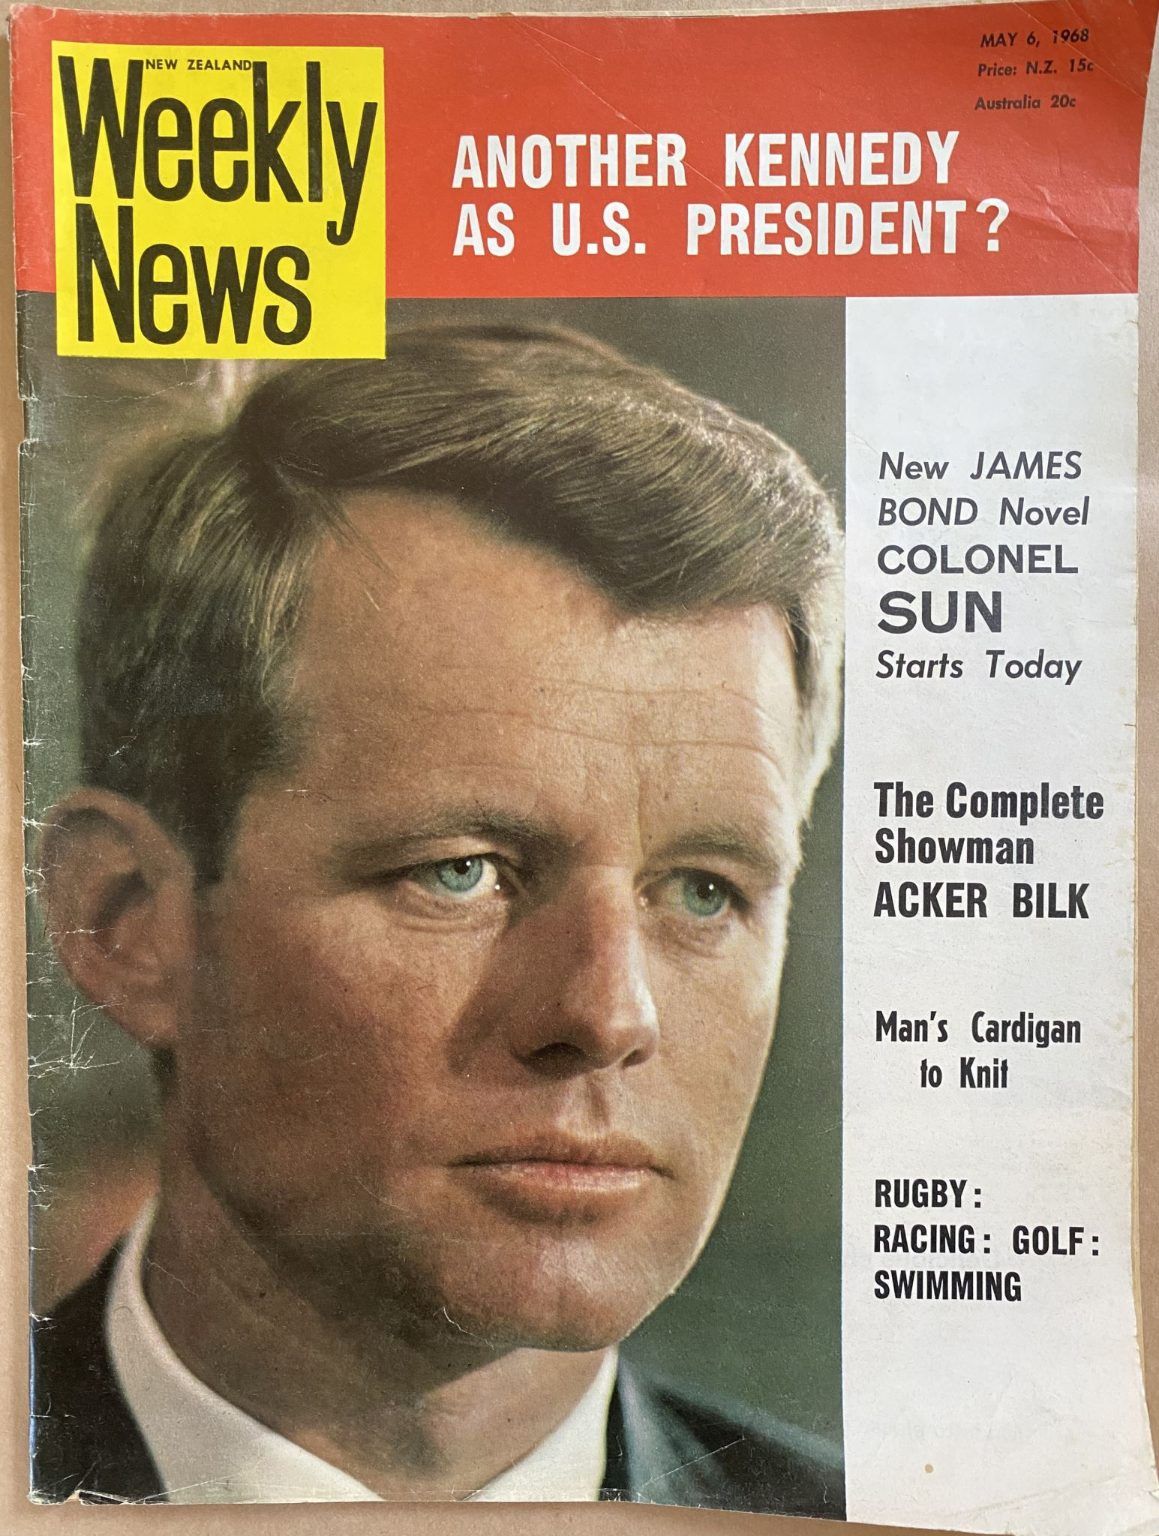 OLD NEWSPAPER: New Zealand Weekly News - No. 5449, 13 May 1968